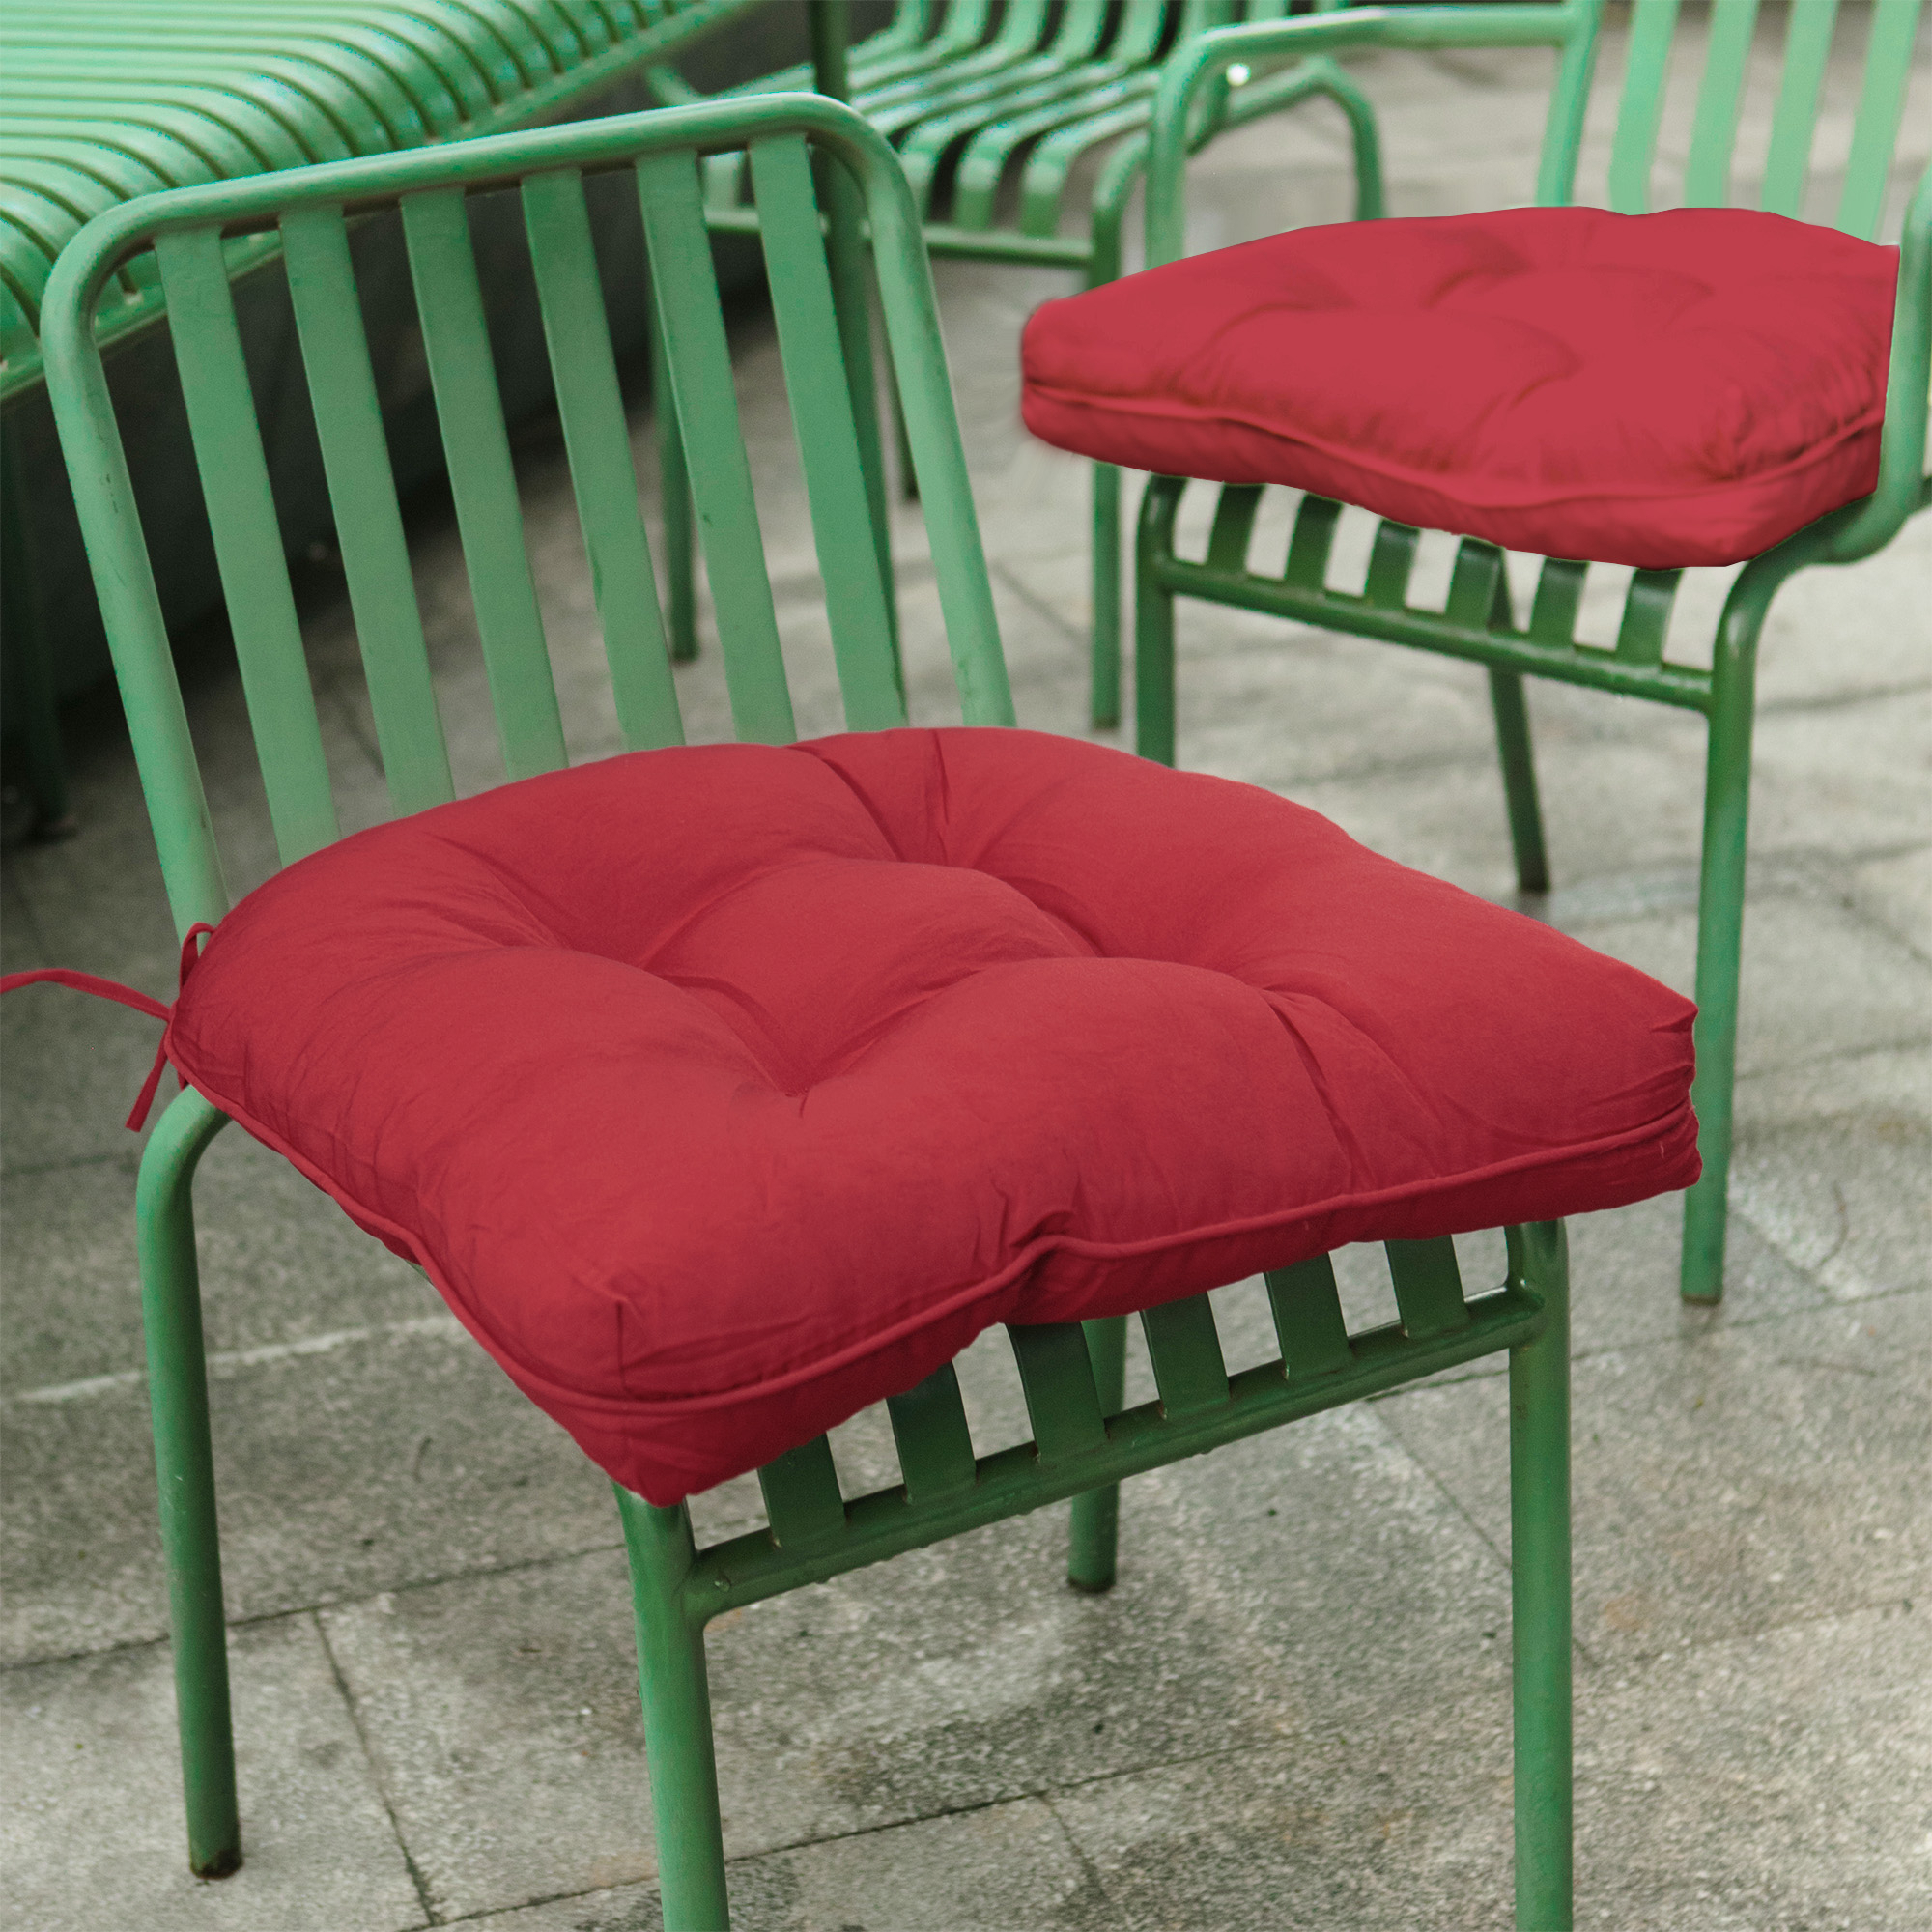 Outdoor Patio Seat Cushion Set Of 2-Waterproof Indoor Outdoor Cushion - Navy